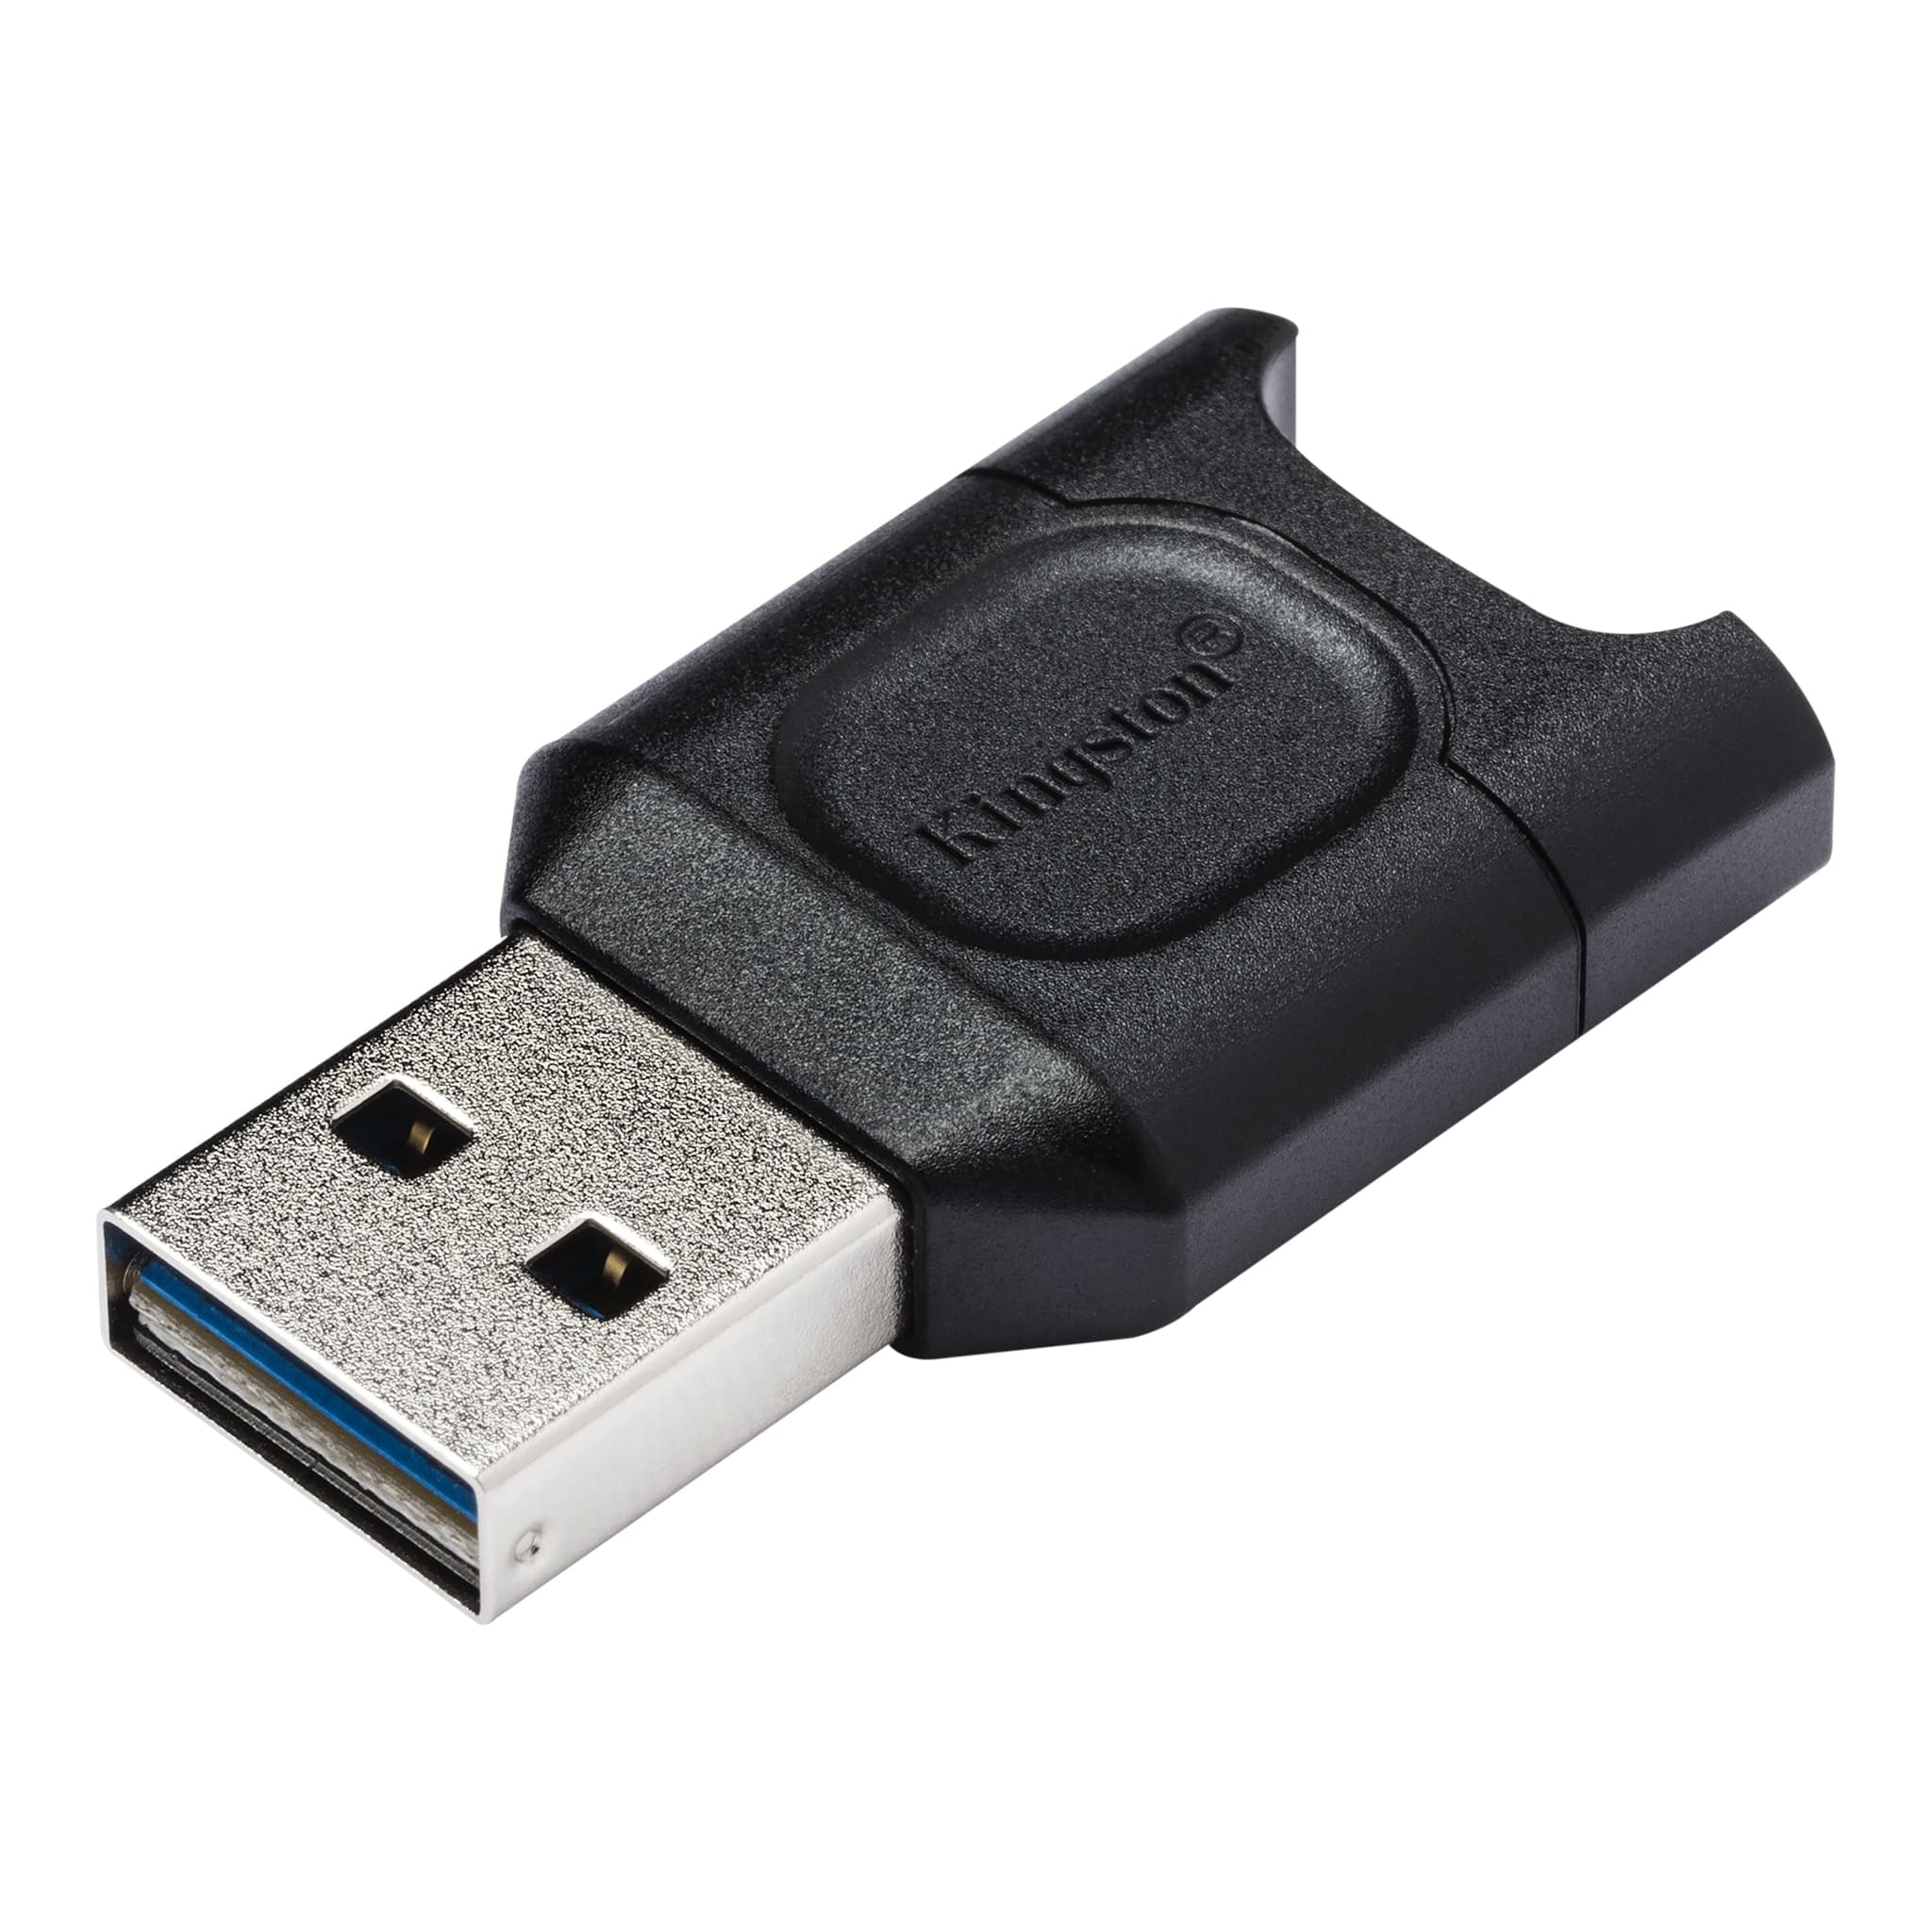 Kingston FCR-MR Kingston čtečka karet, MobileLite Plus USB 3.1 microSDHC/SDXC UHS-II čtečka karet